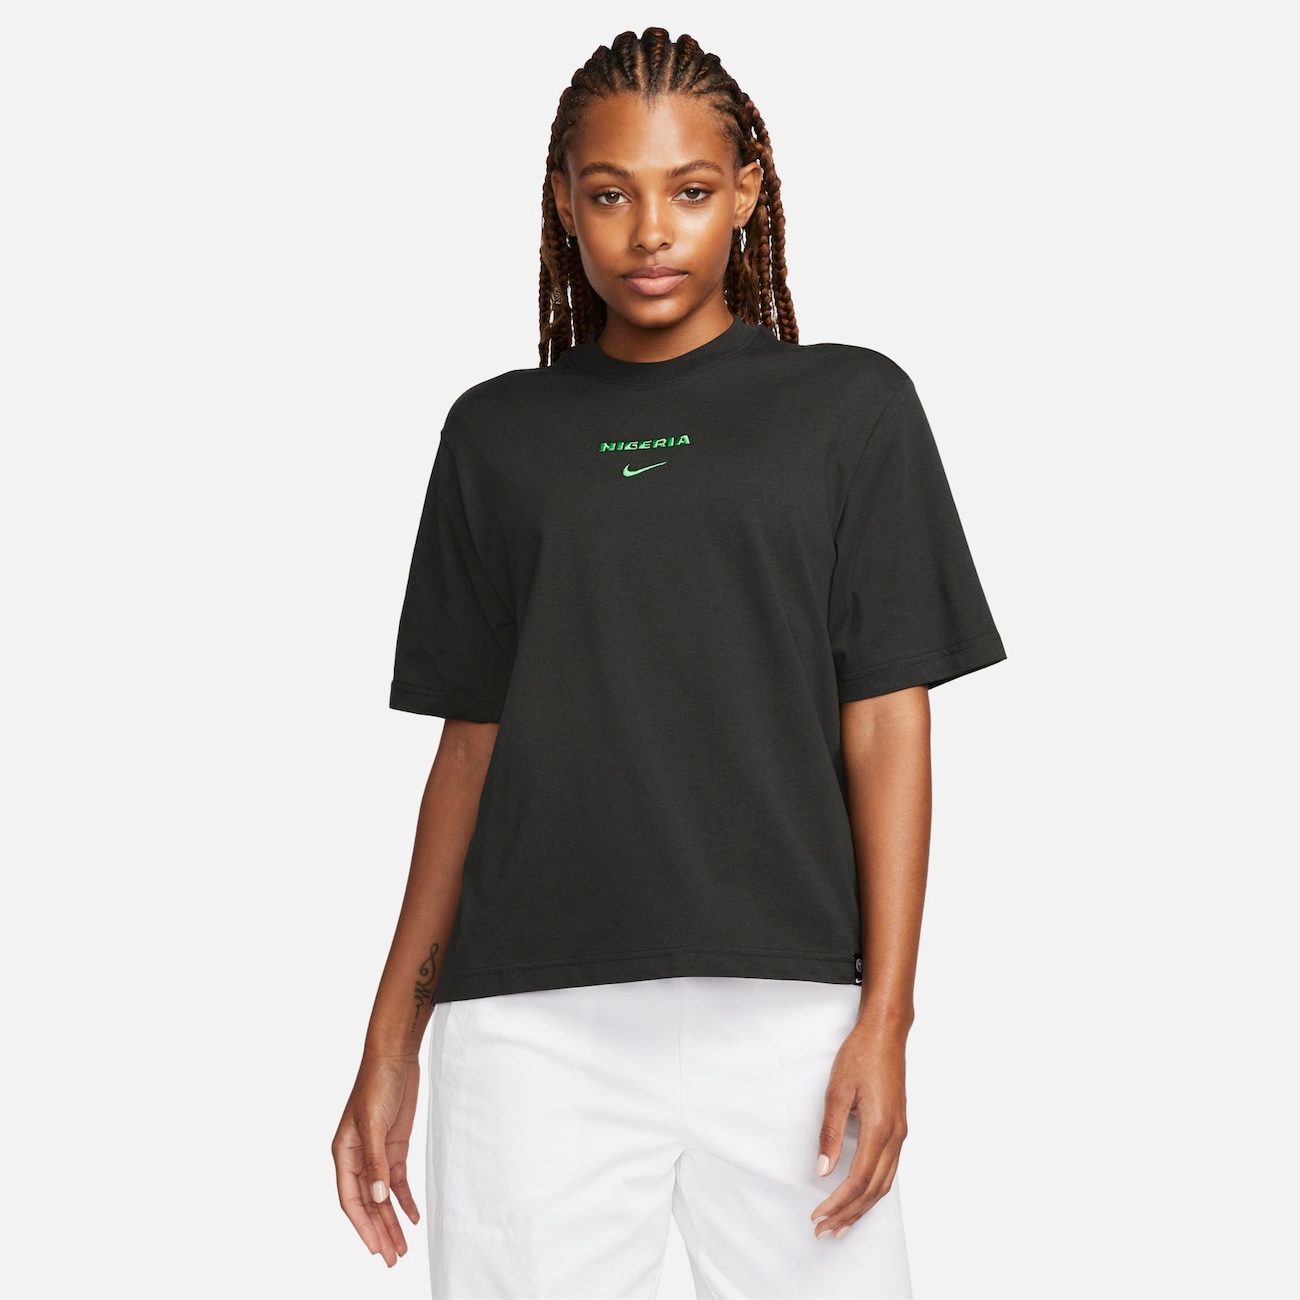 Camiseta Nike Nigéria Feminina